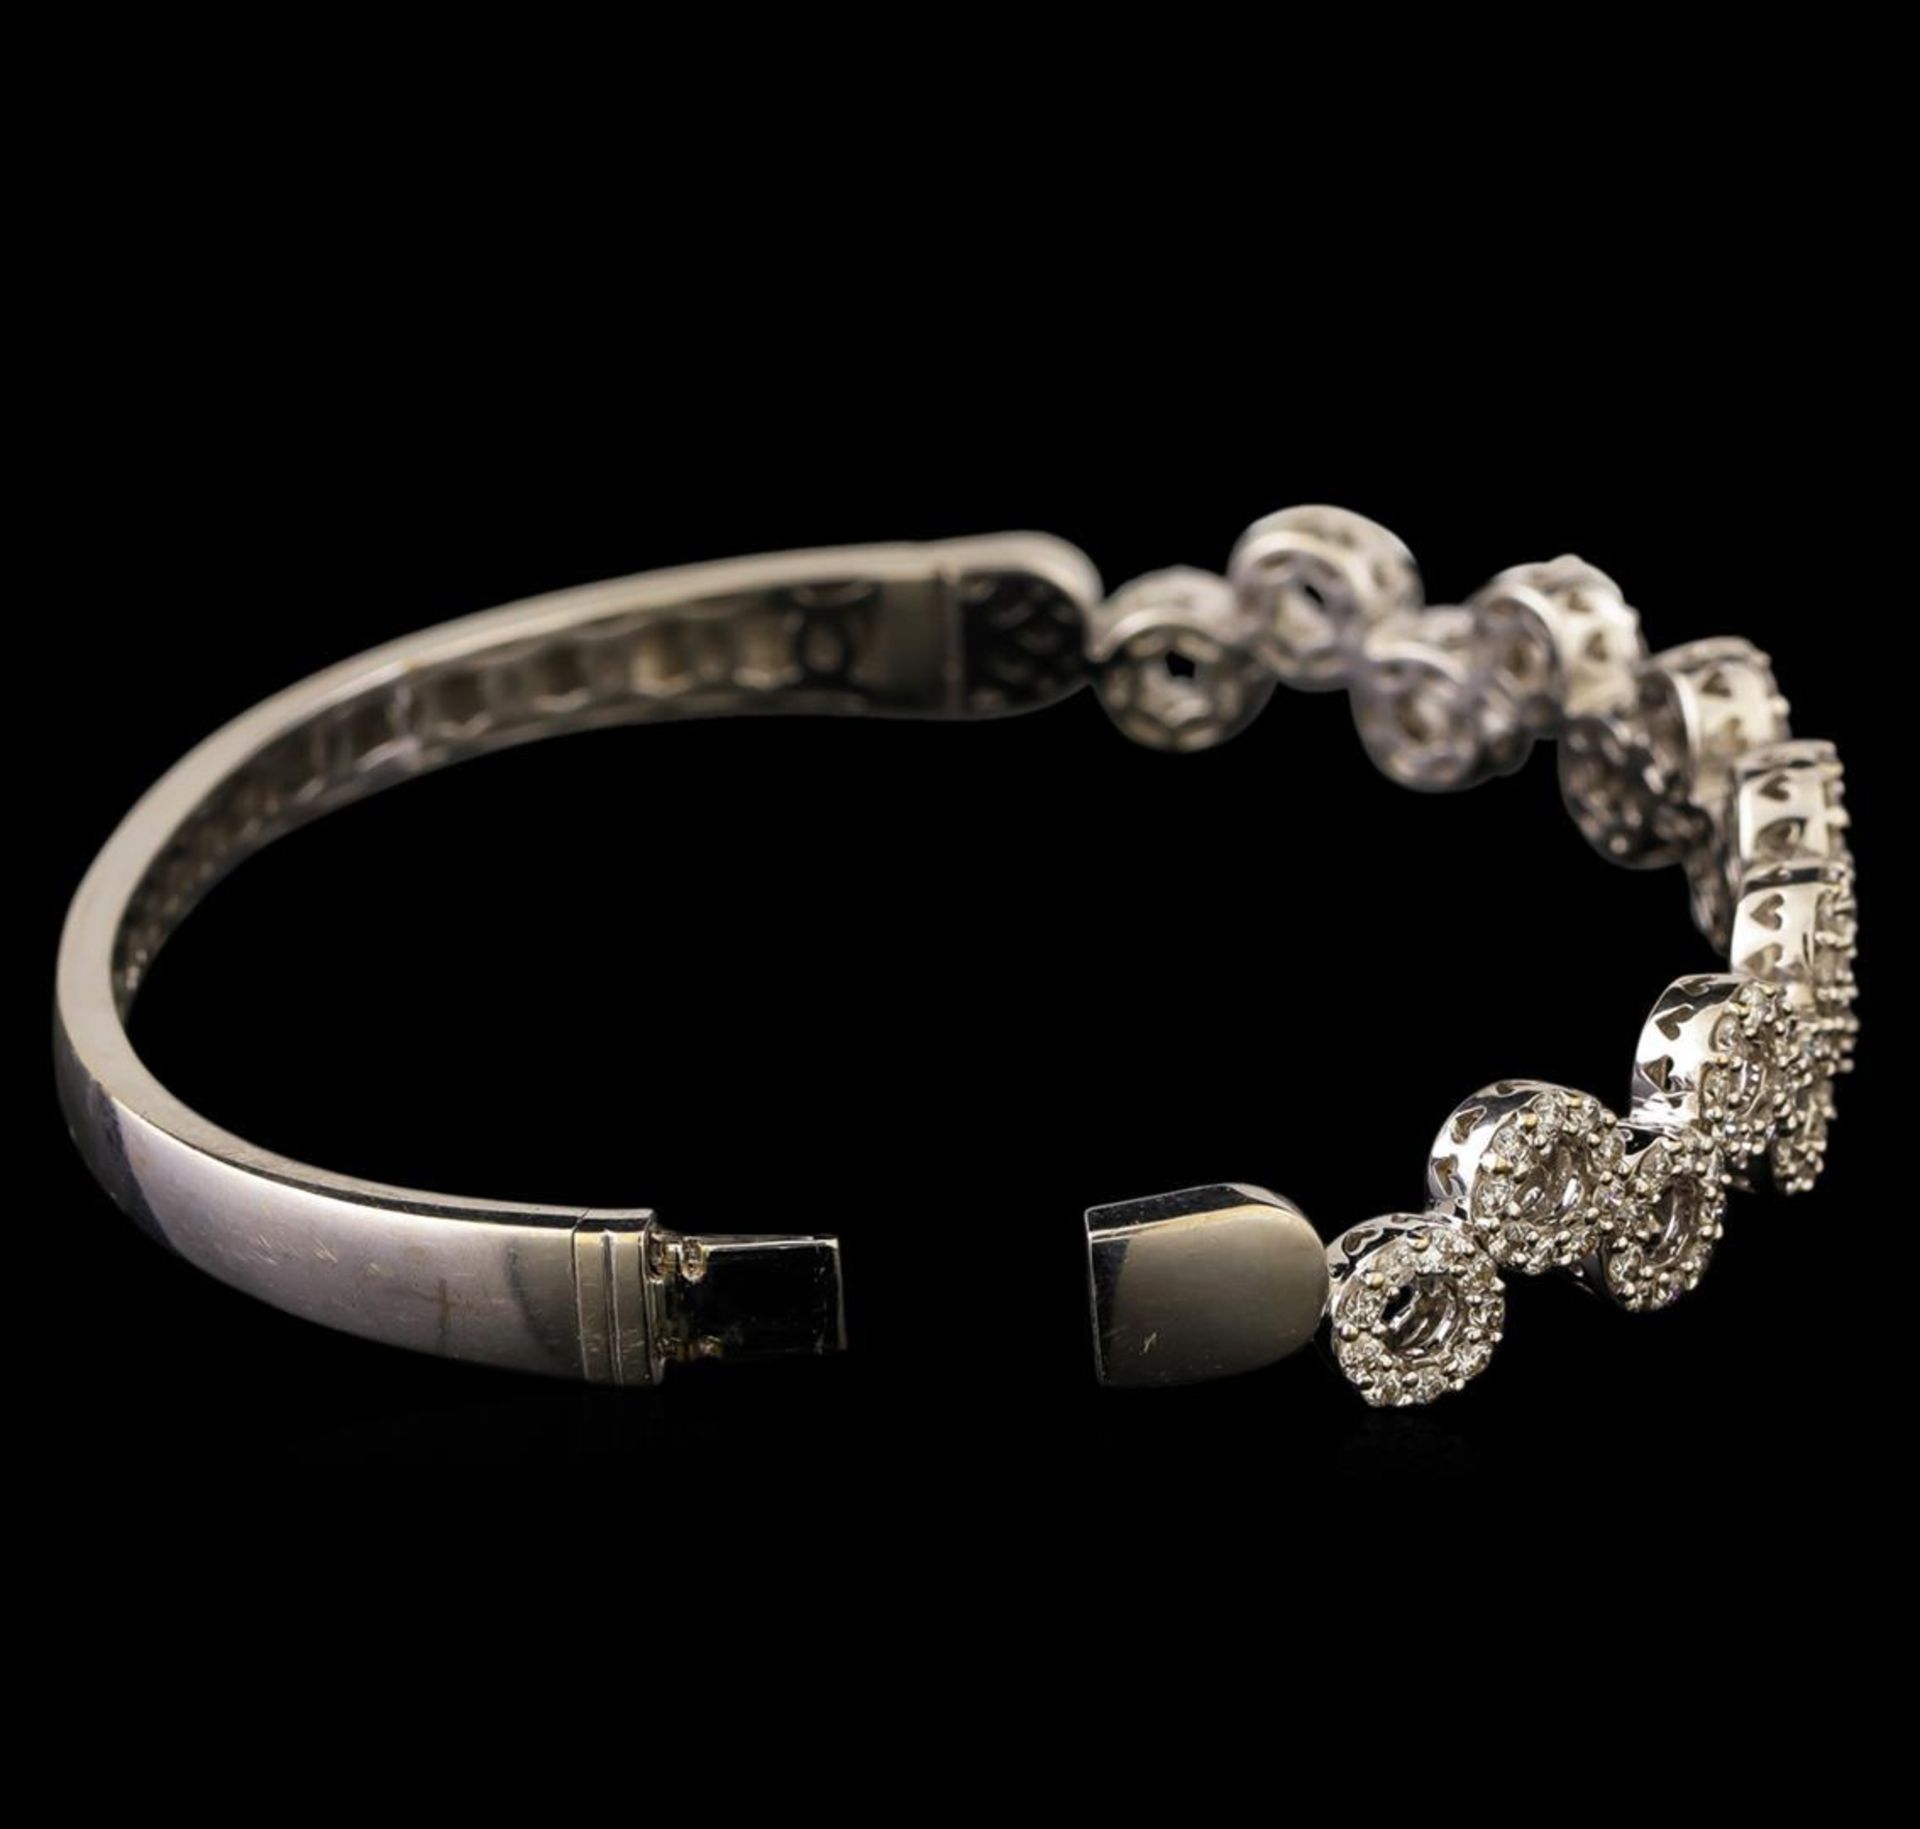 1.55 ctw Diamond Bangle Bracelet - 18KT White Gold - Image 3 of 4